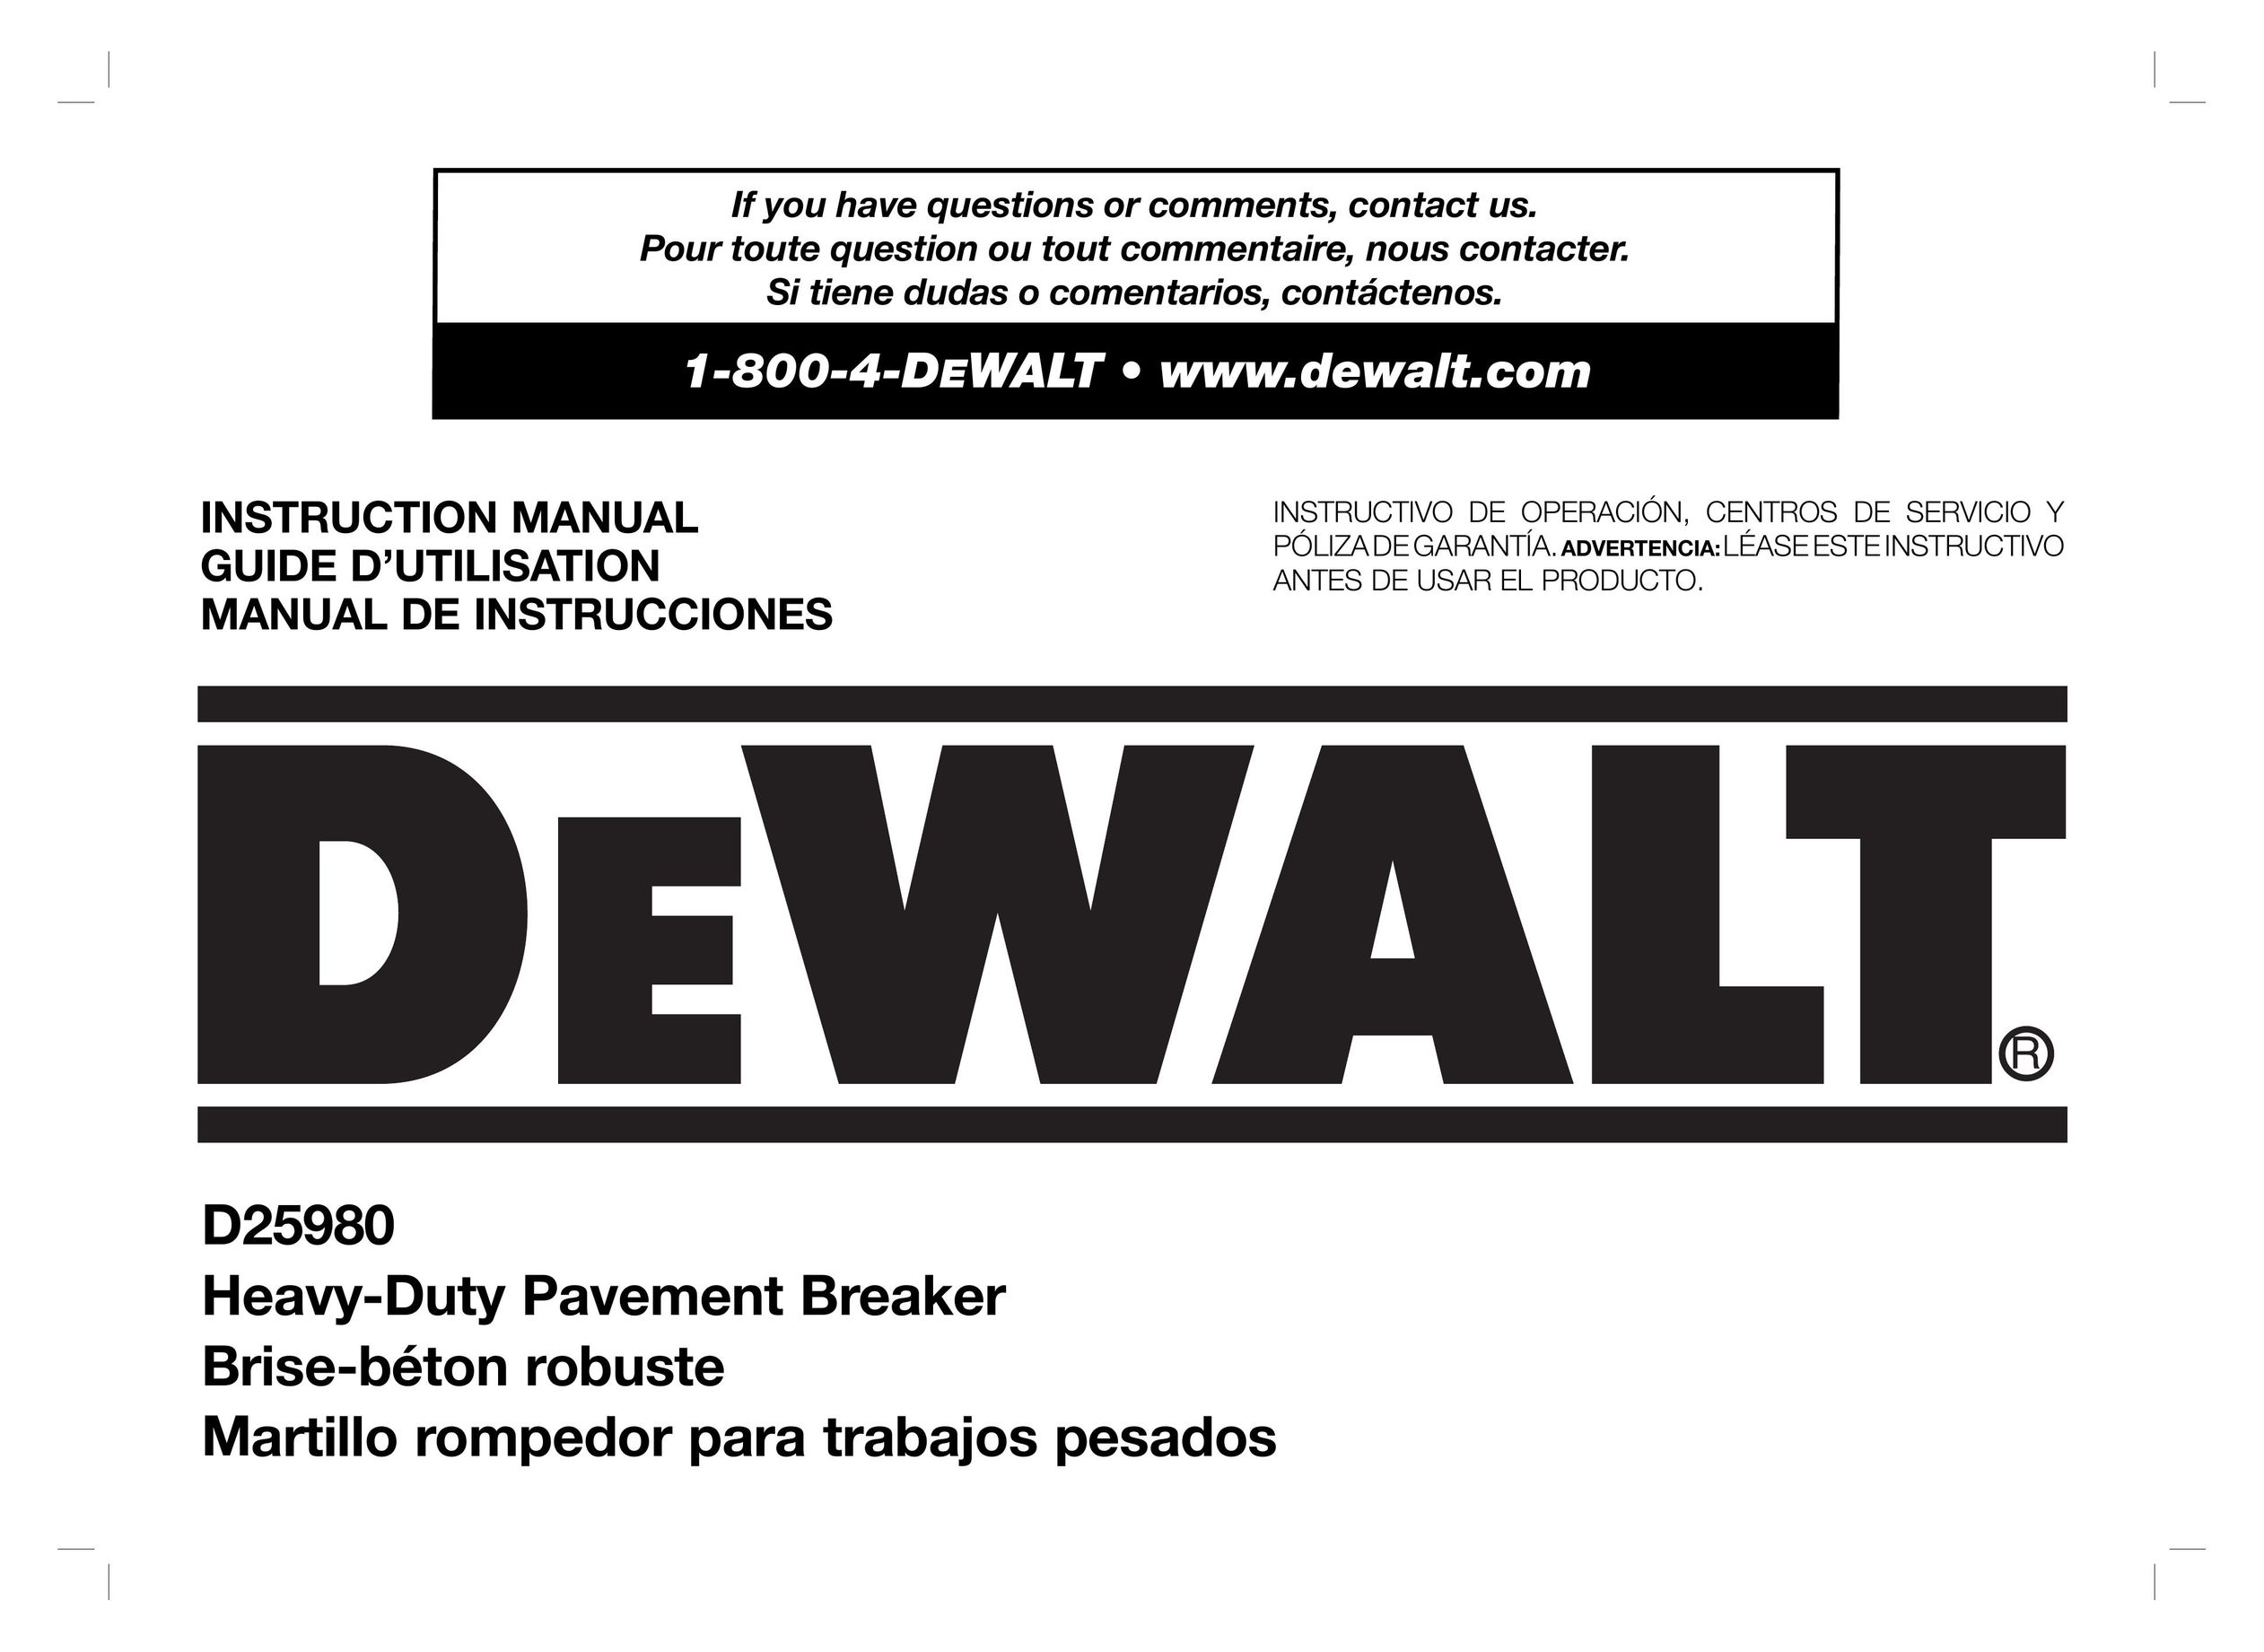 DeWalt D25980 Power Hammer User Manual